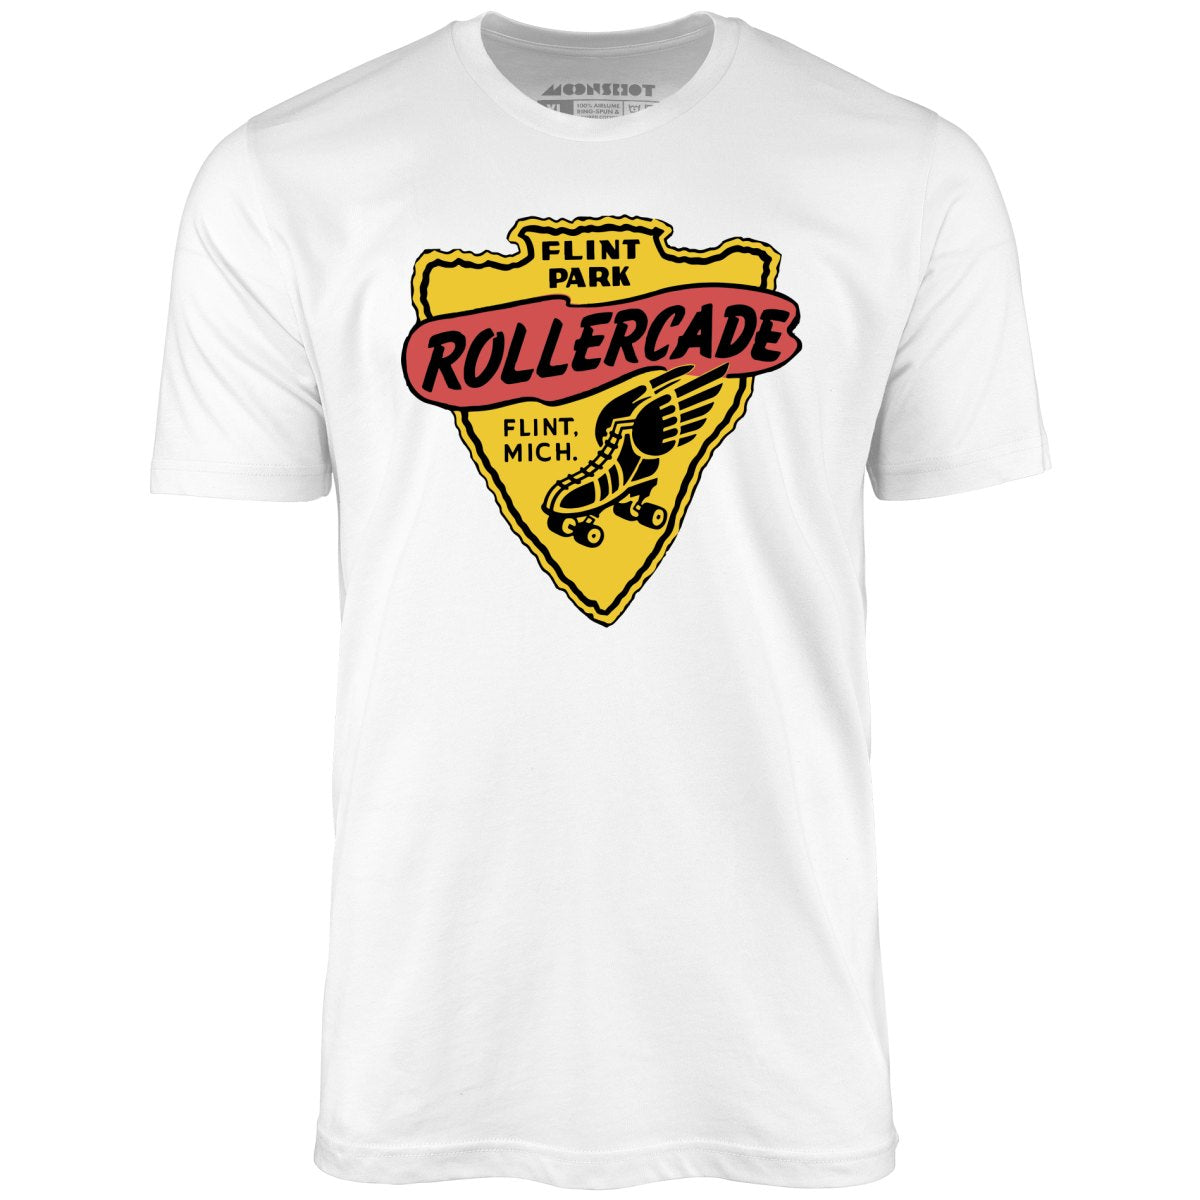 Flint Park Rollercade - Flint, MI - Vintage Roller Rink - Unisex T-Shirt